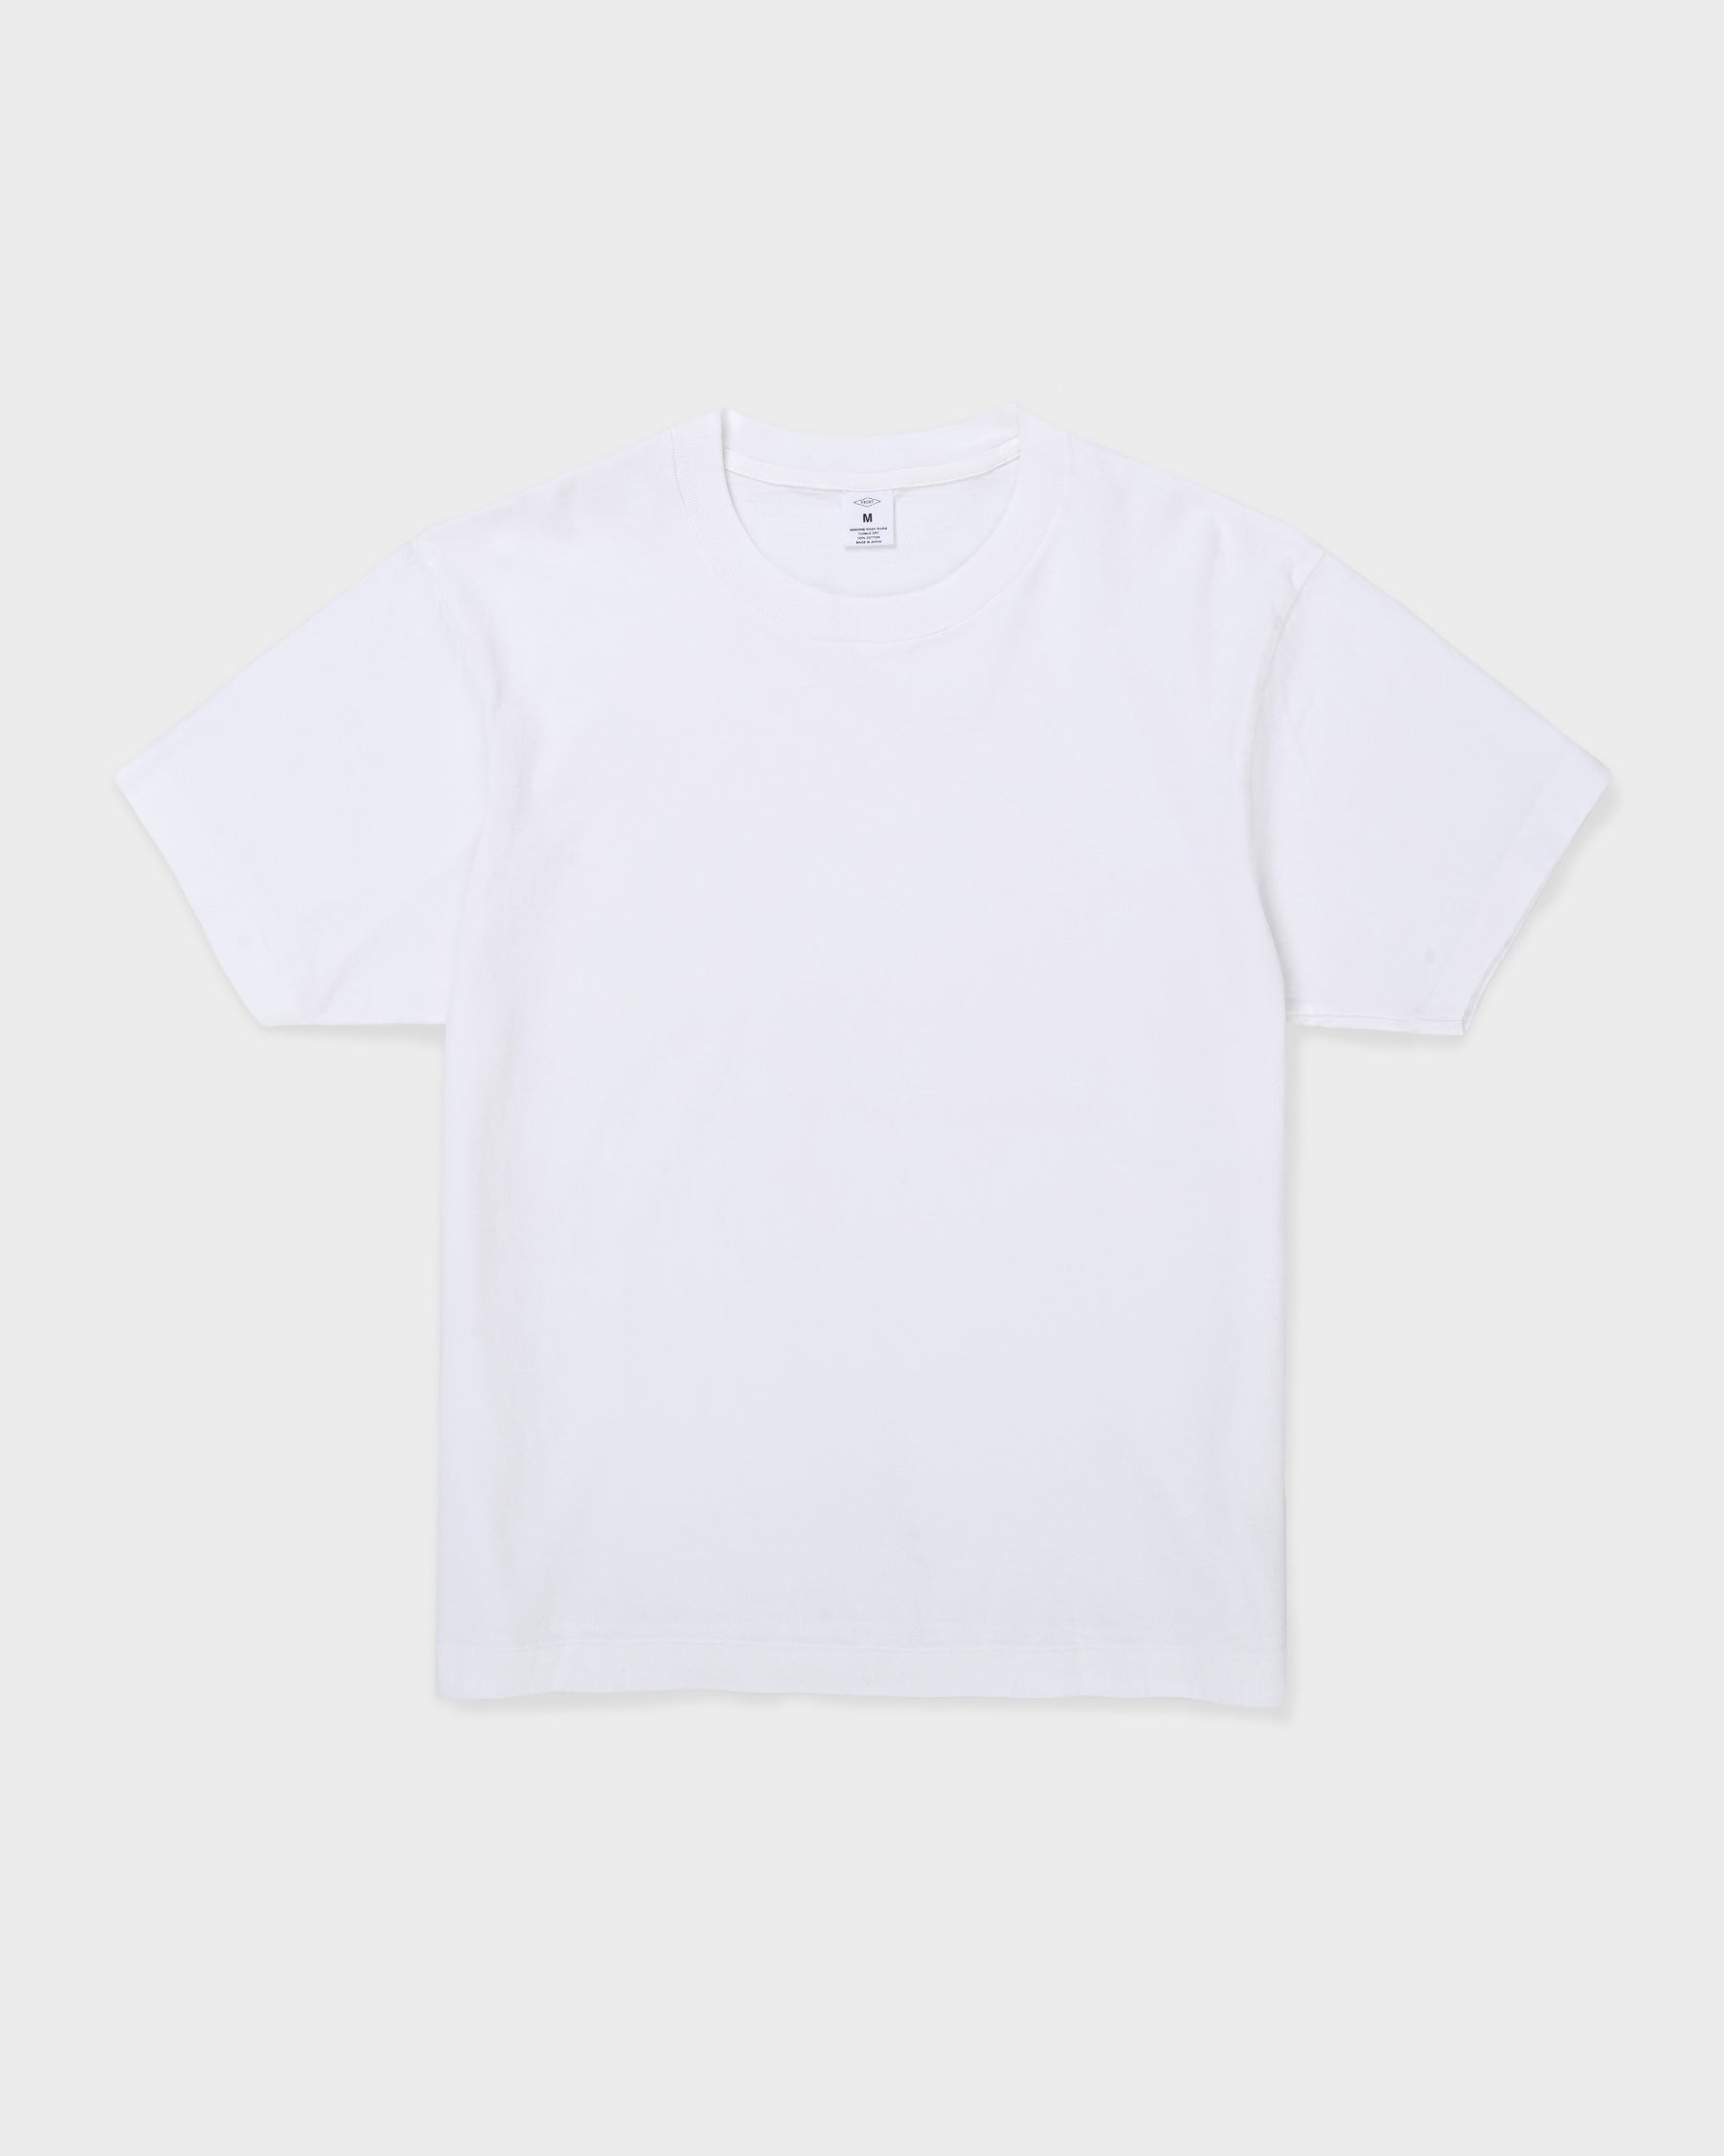 Soft T-shirts No-Pocket White T-shirts